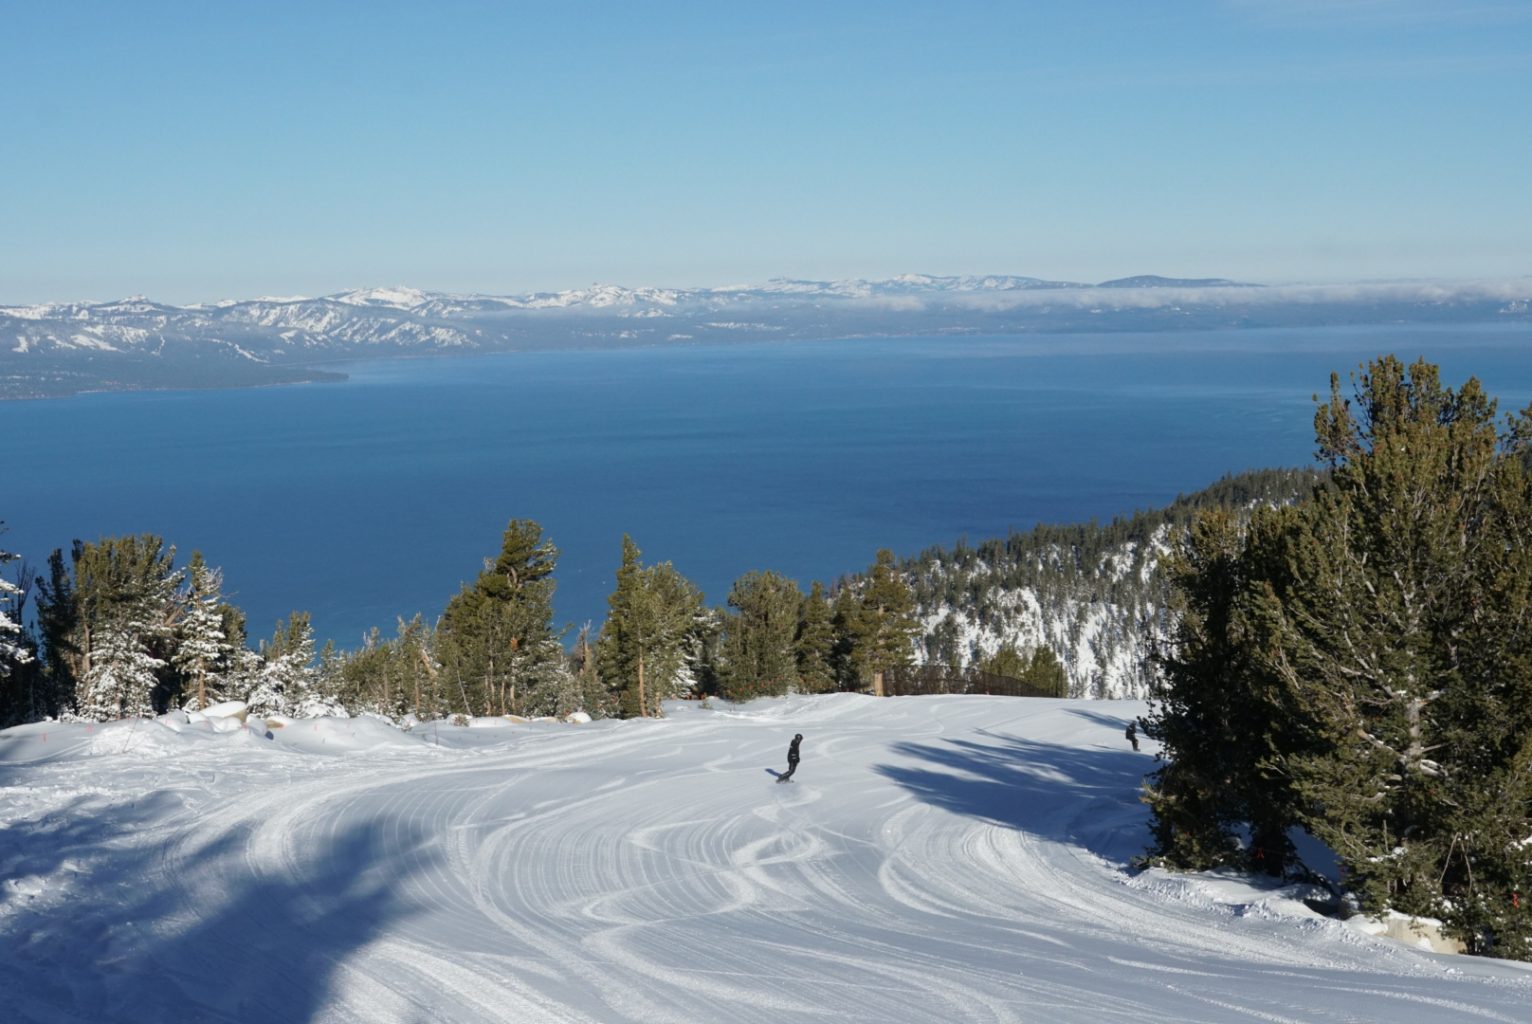 Heavenly Ski resort